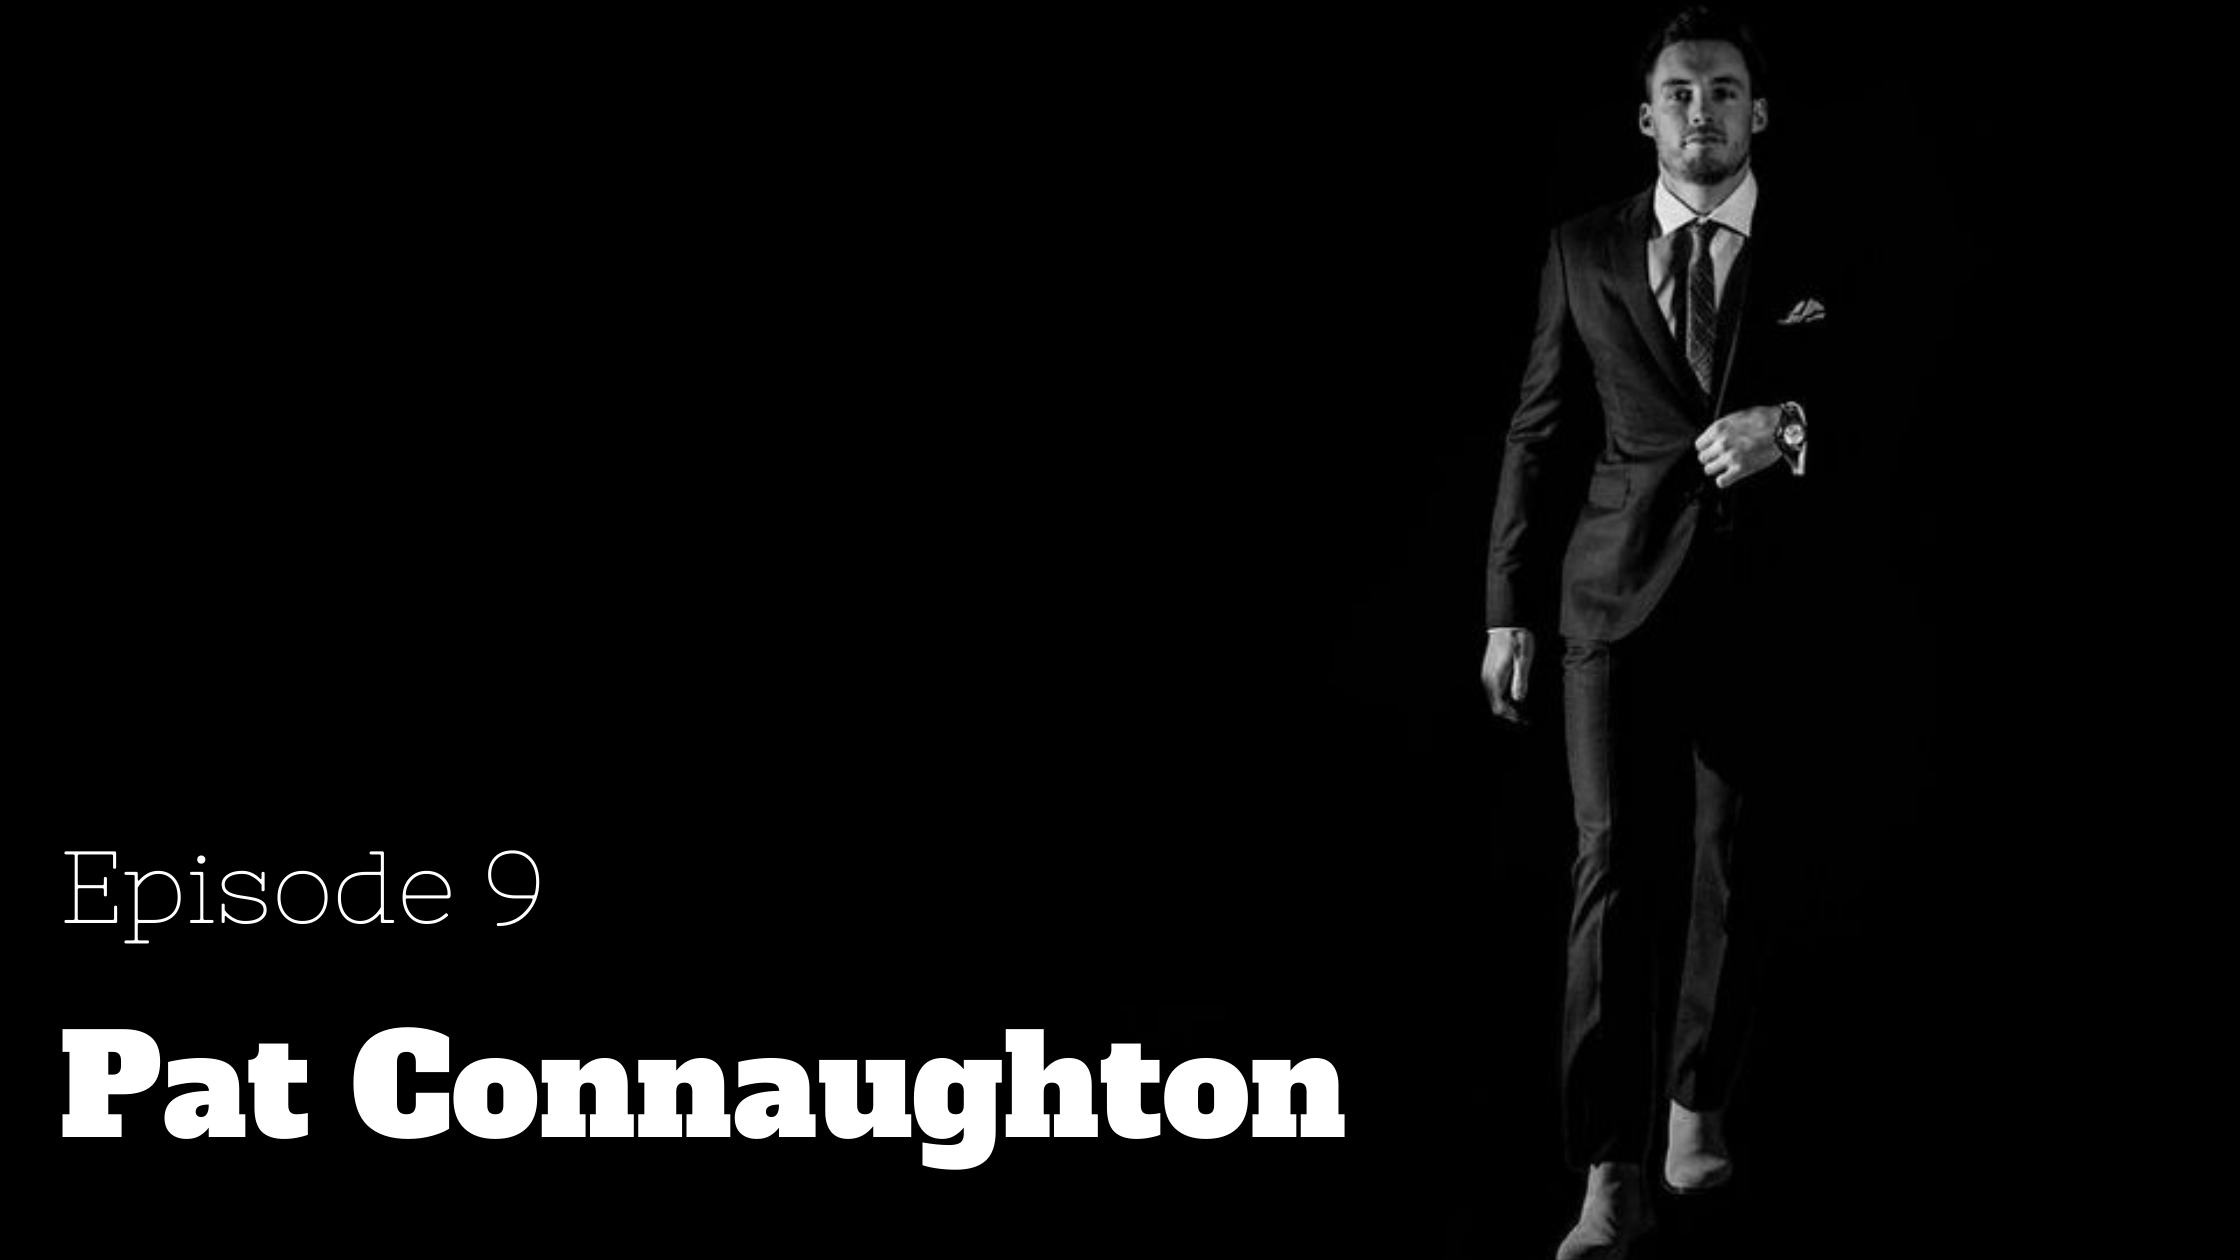 Arlington's Pat Connaughton discusses becoming an NBA champion